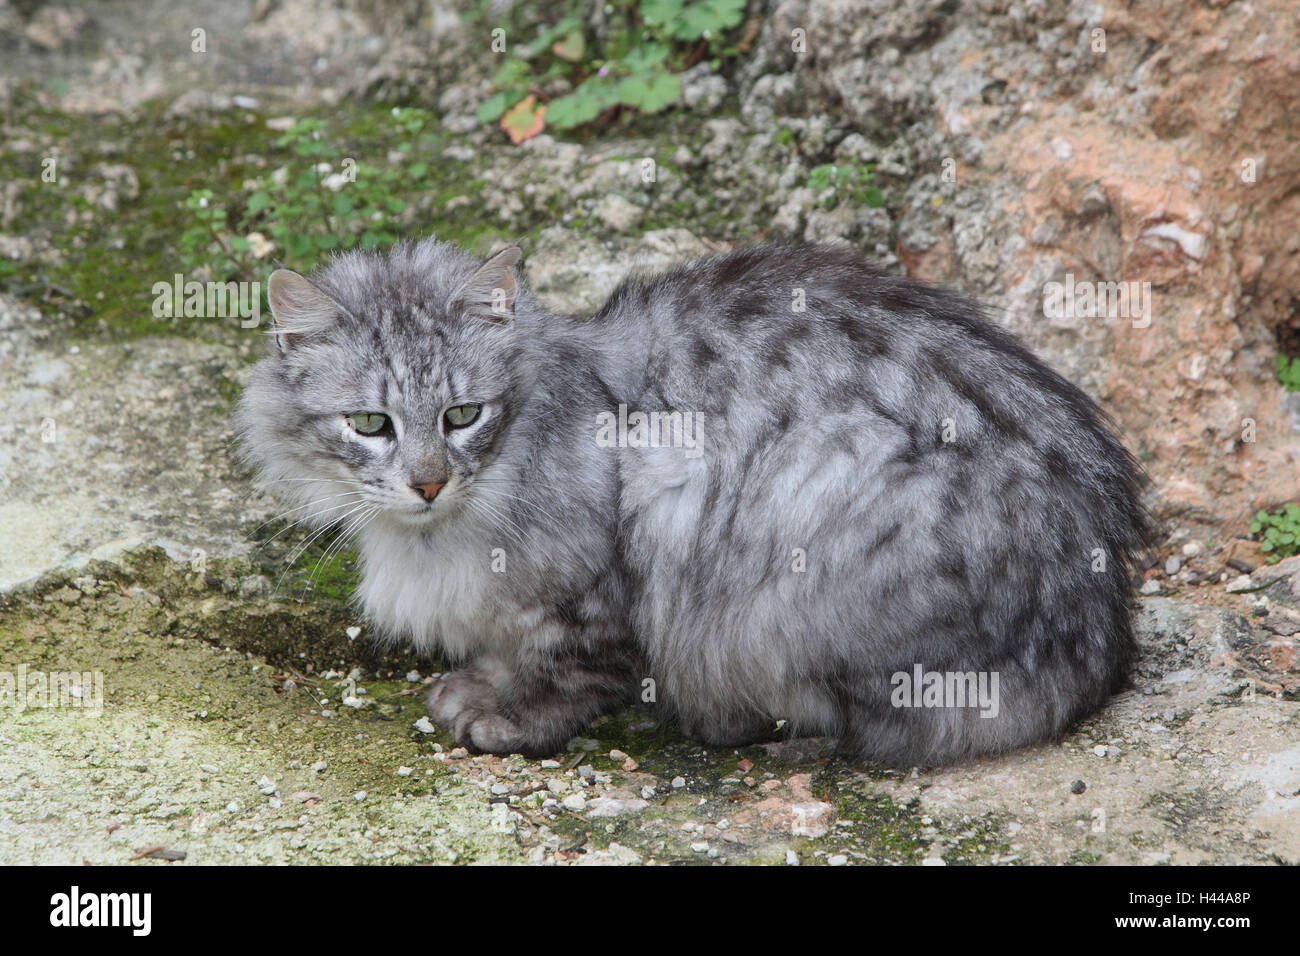 Cats Long Hair Grey Striped Crouch Animals Mammals Pets